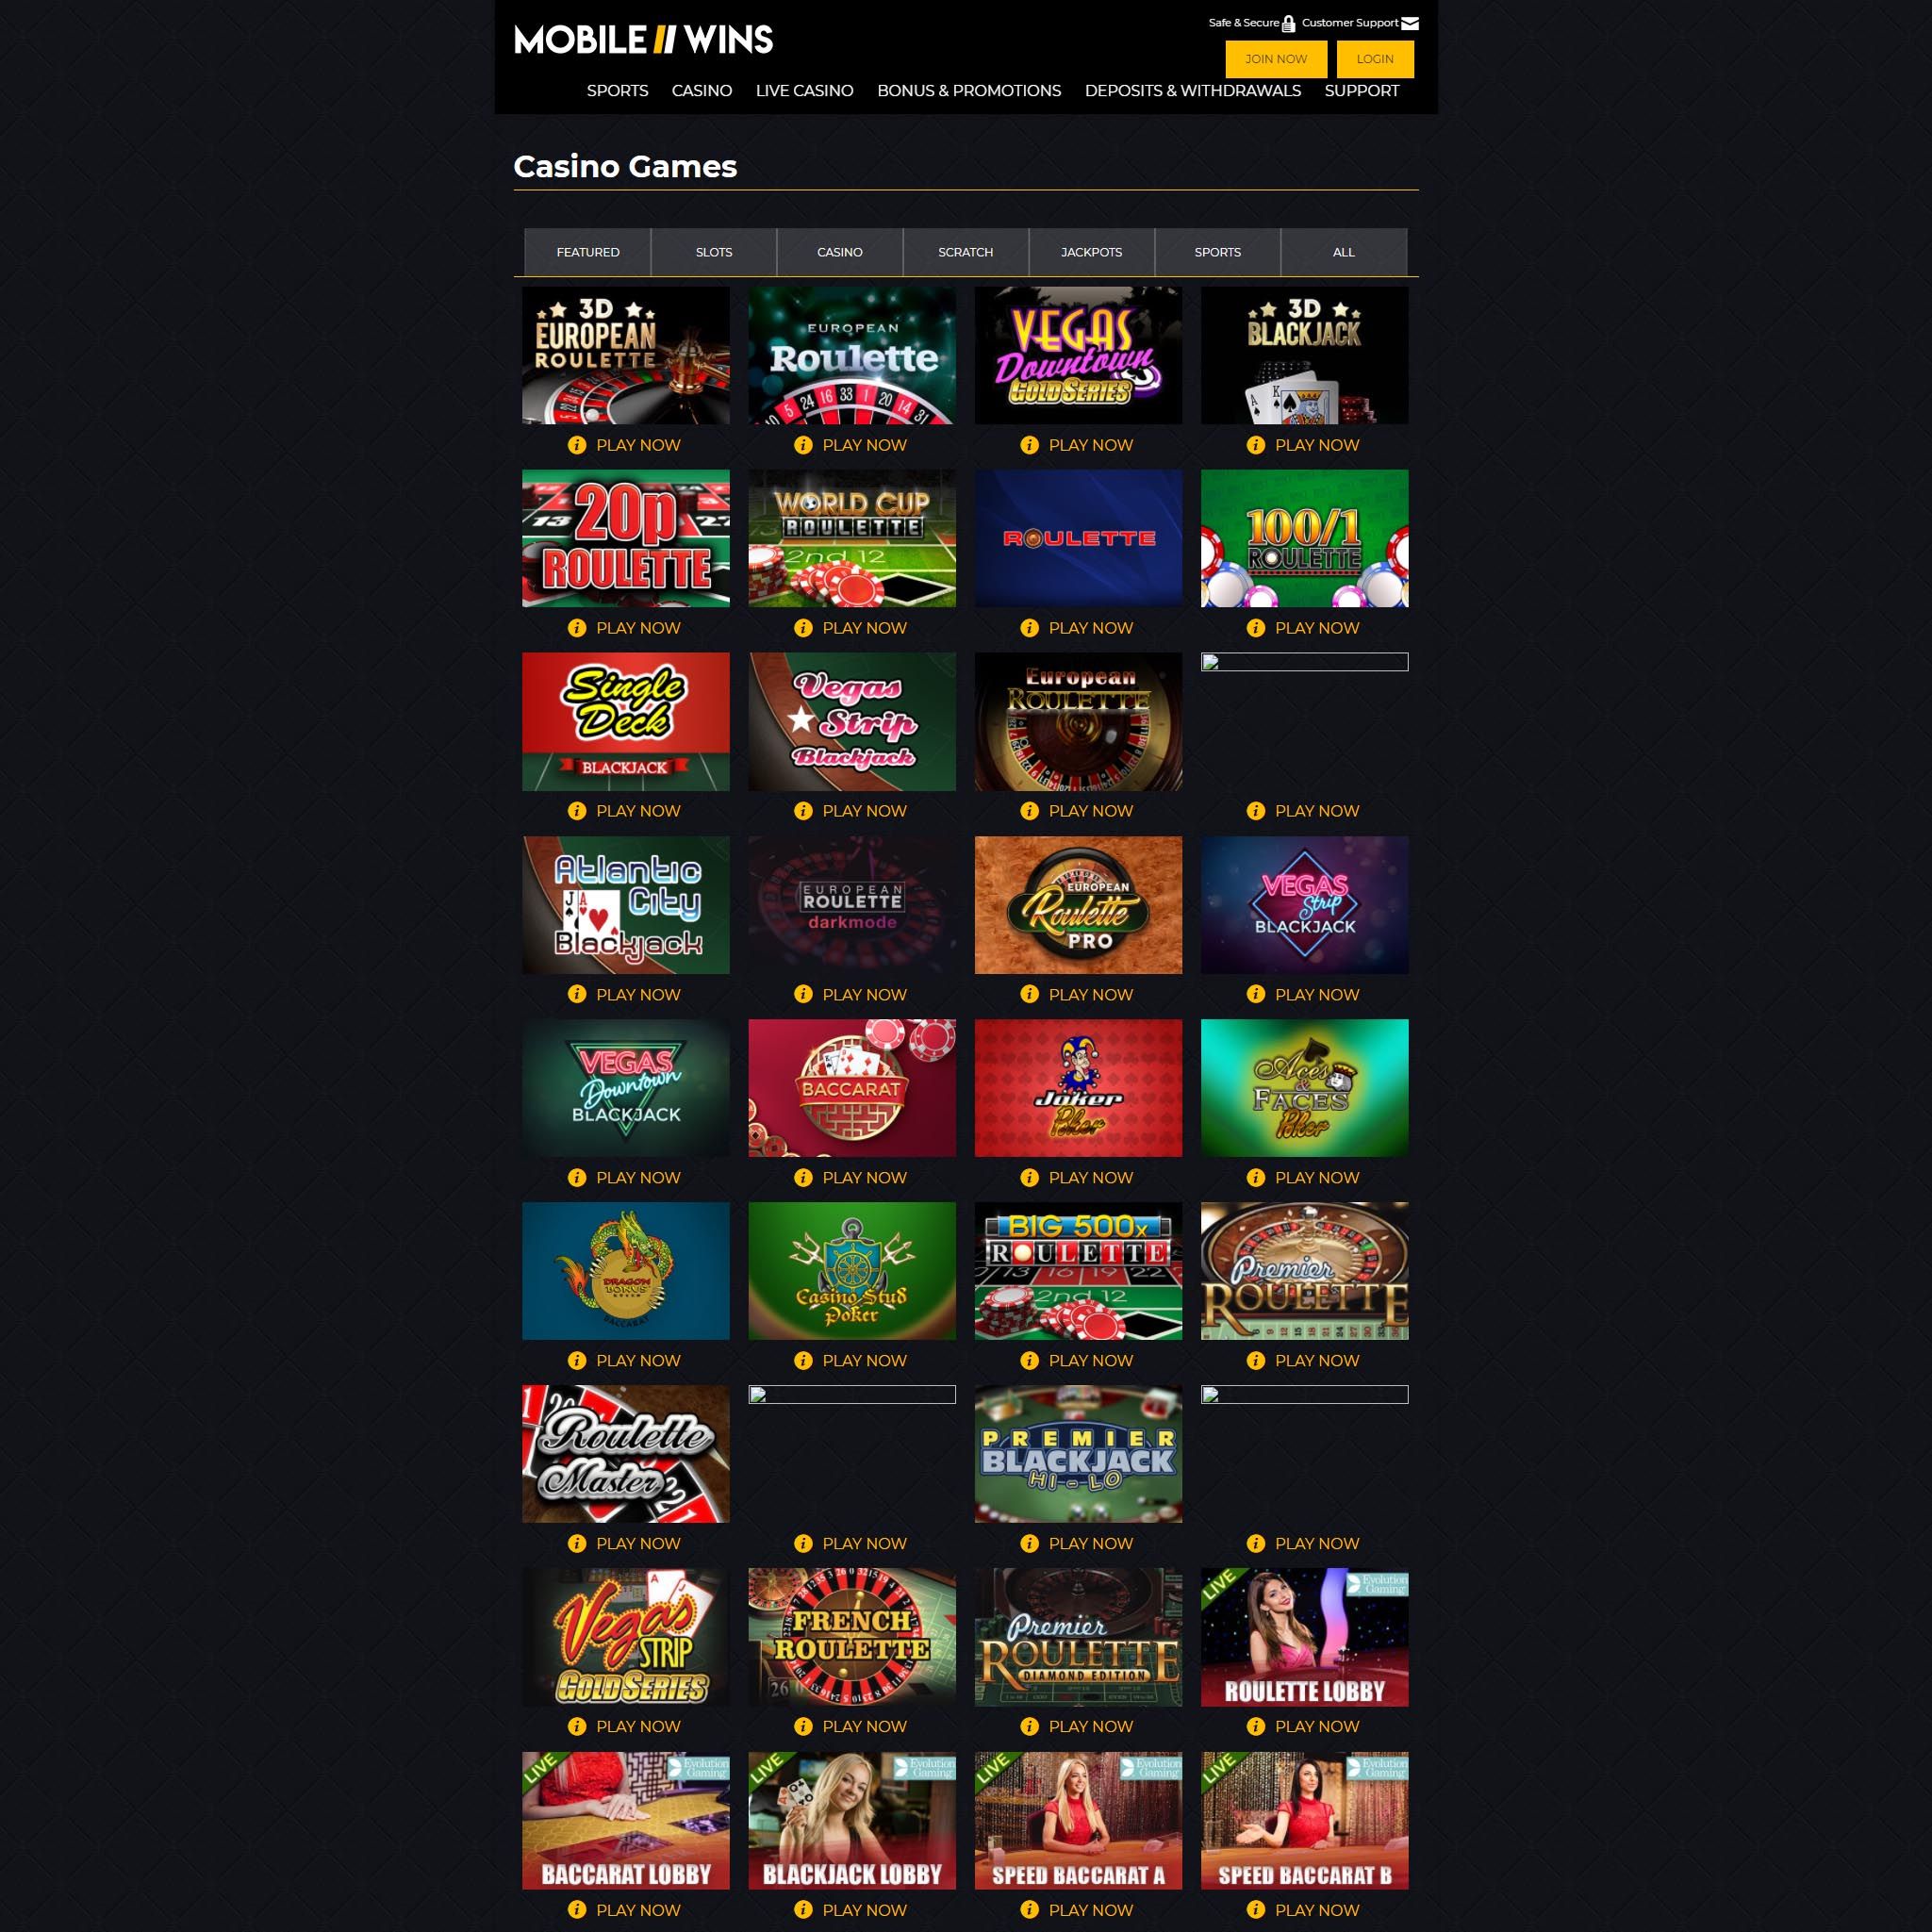 Find Mobile Wins Casino game catalog